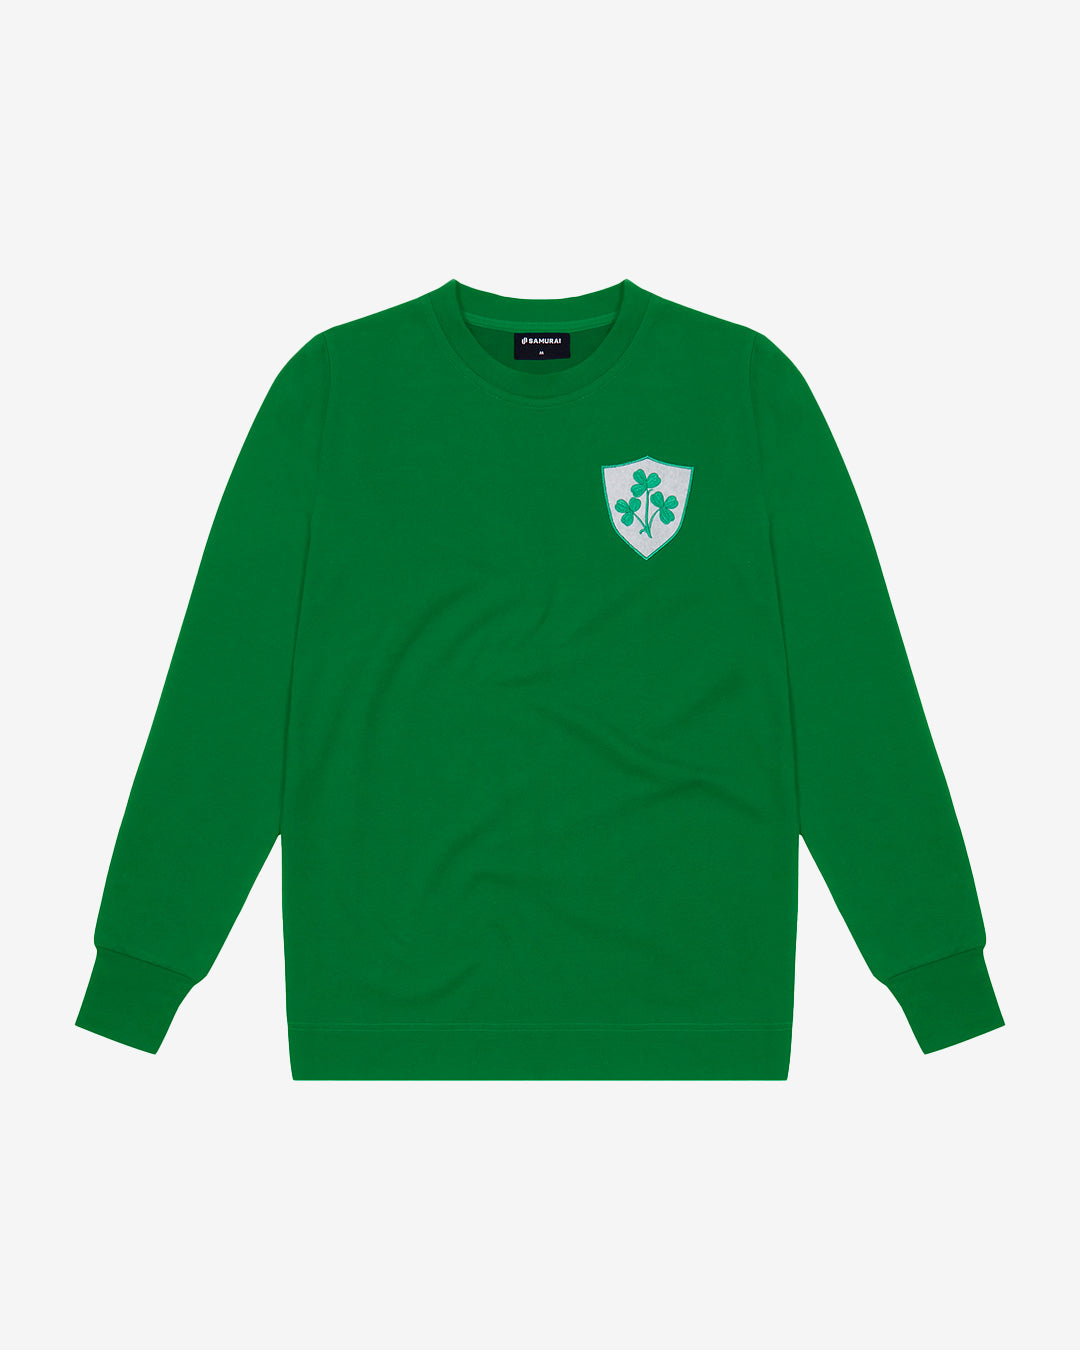 VC: IRL - Women's Vintage Crew Neck Rugby Shirt - Ireland